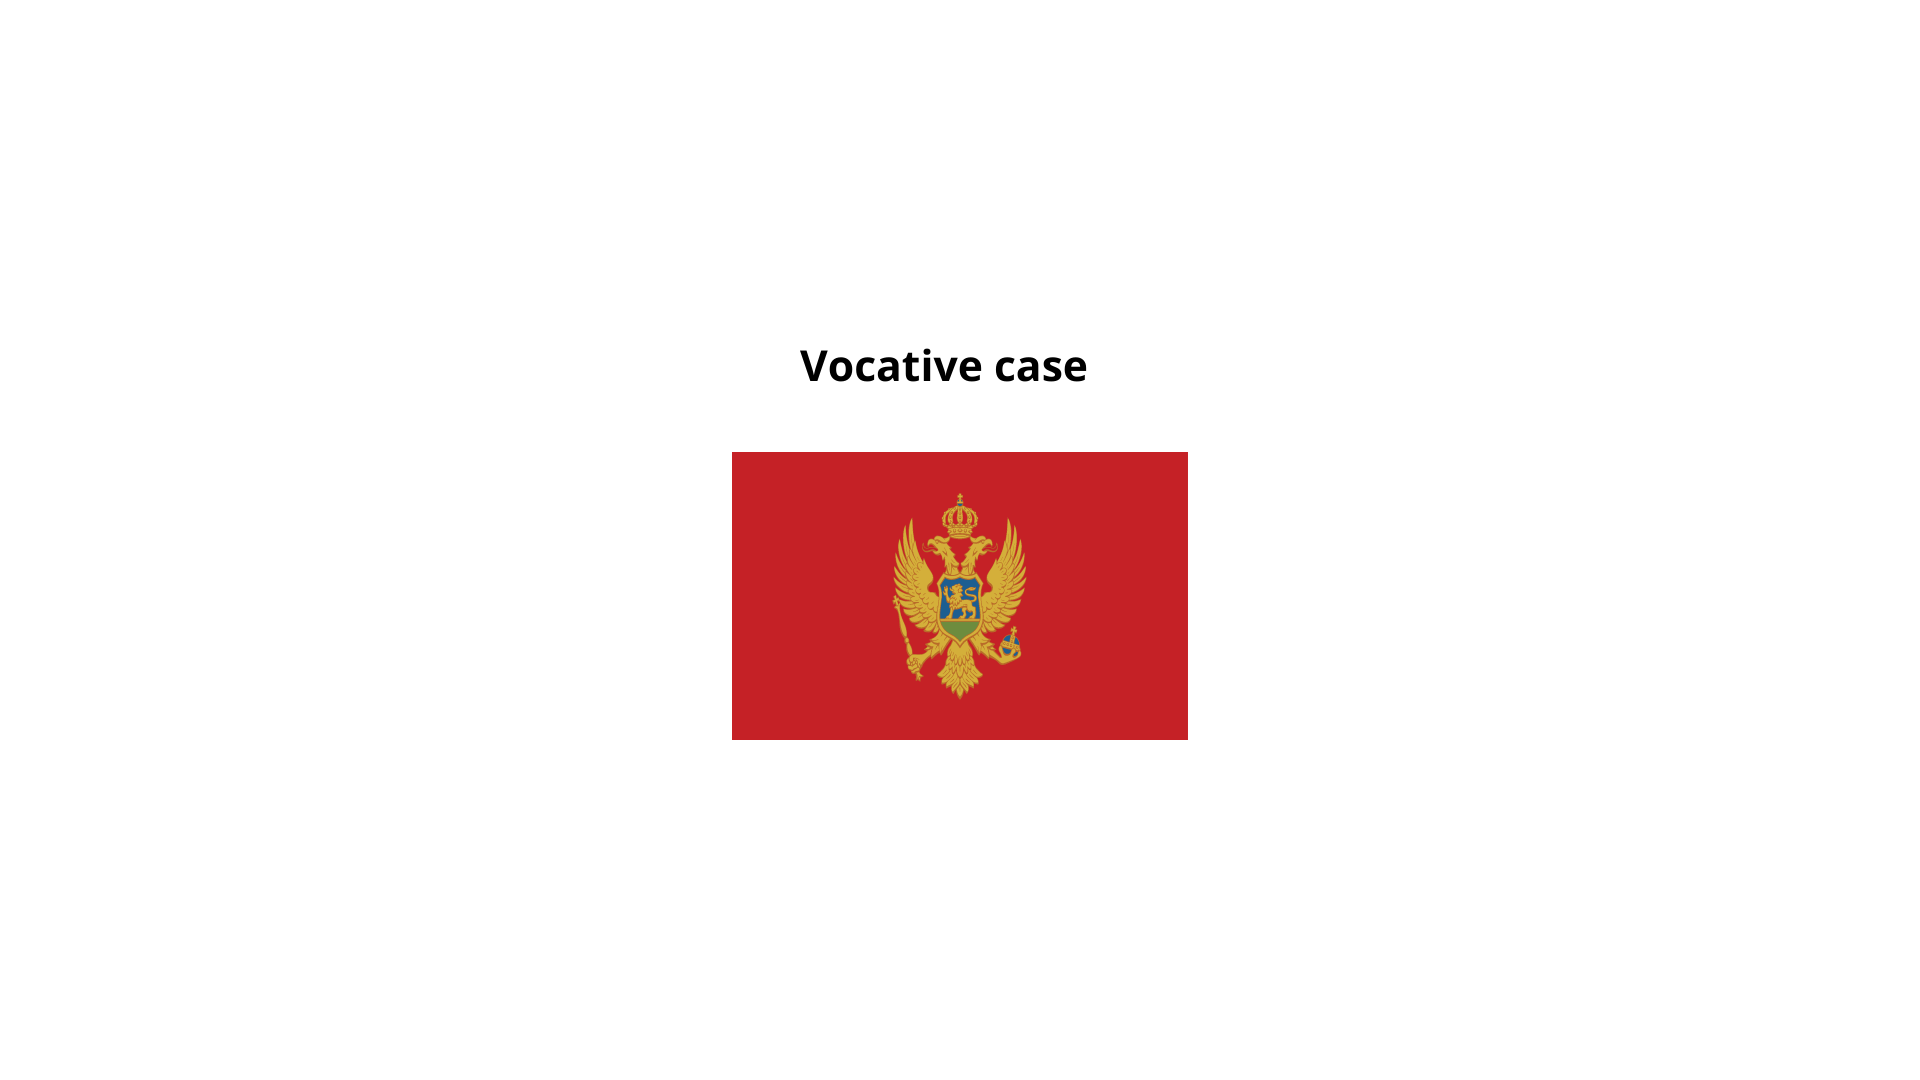 The Vocative Case in Montenegrin